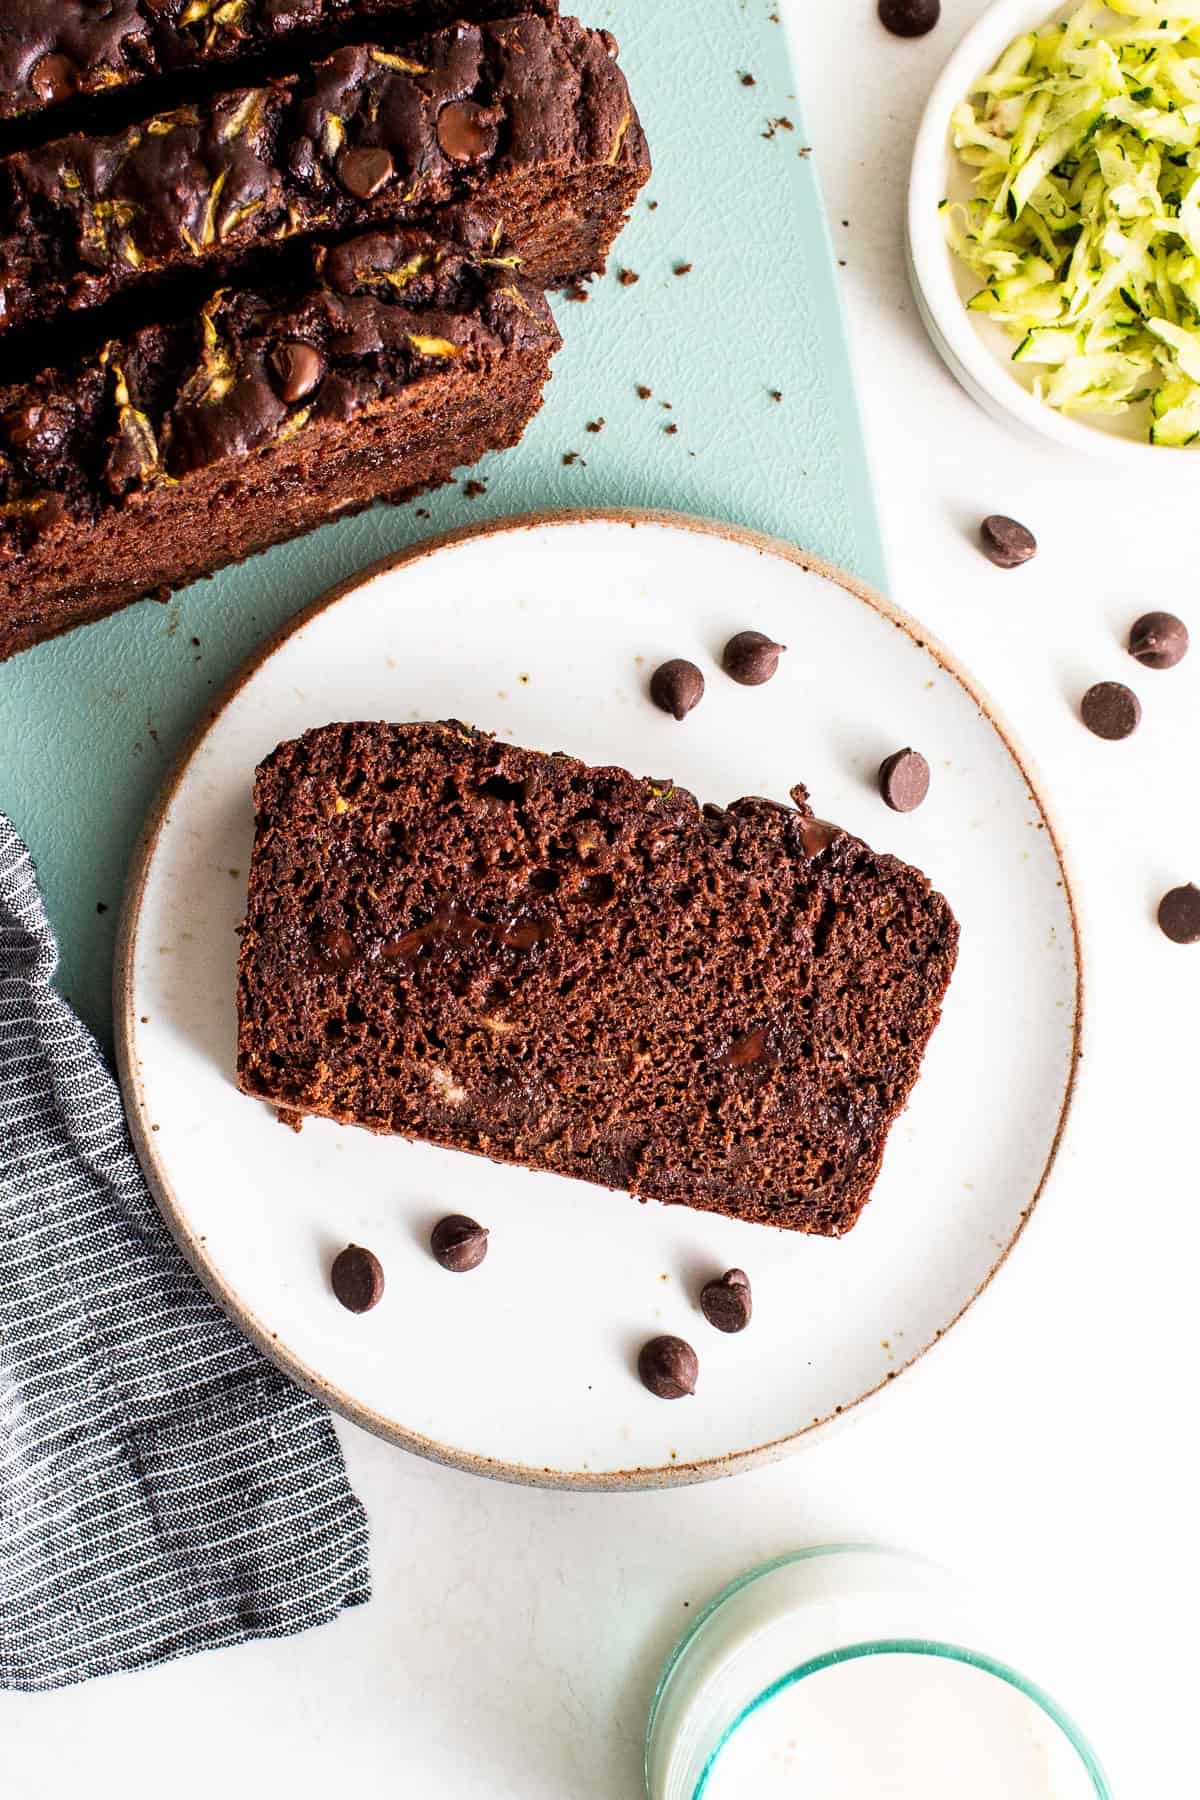 Hot Fudge Brownie Bread 2: A Decadent Twist on a Classic Recipe